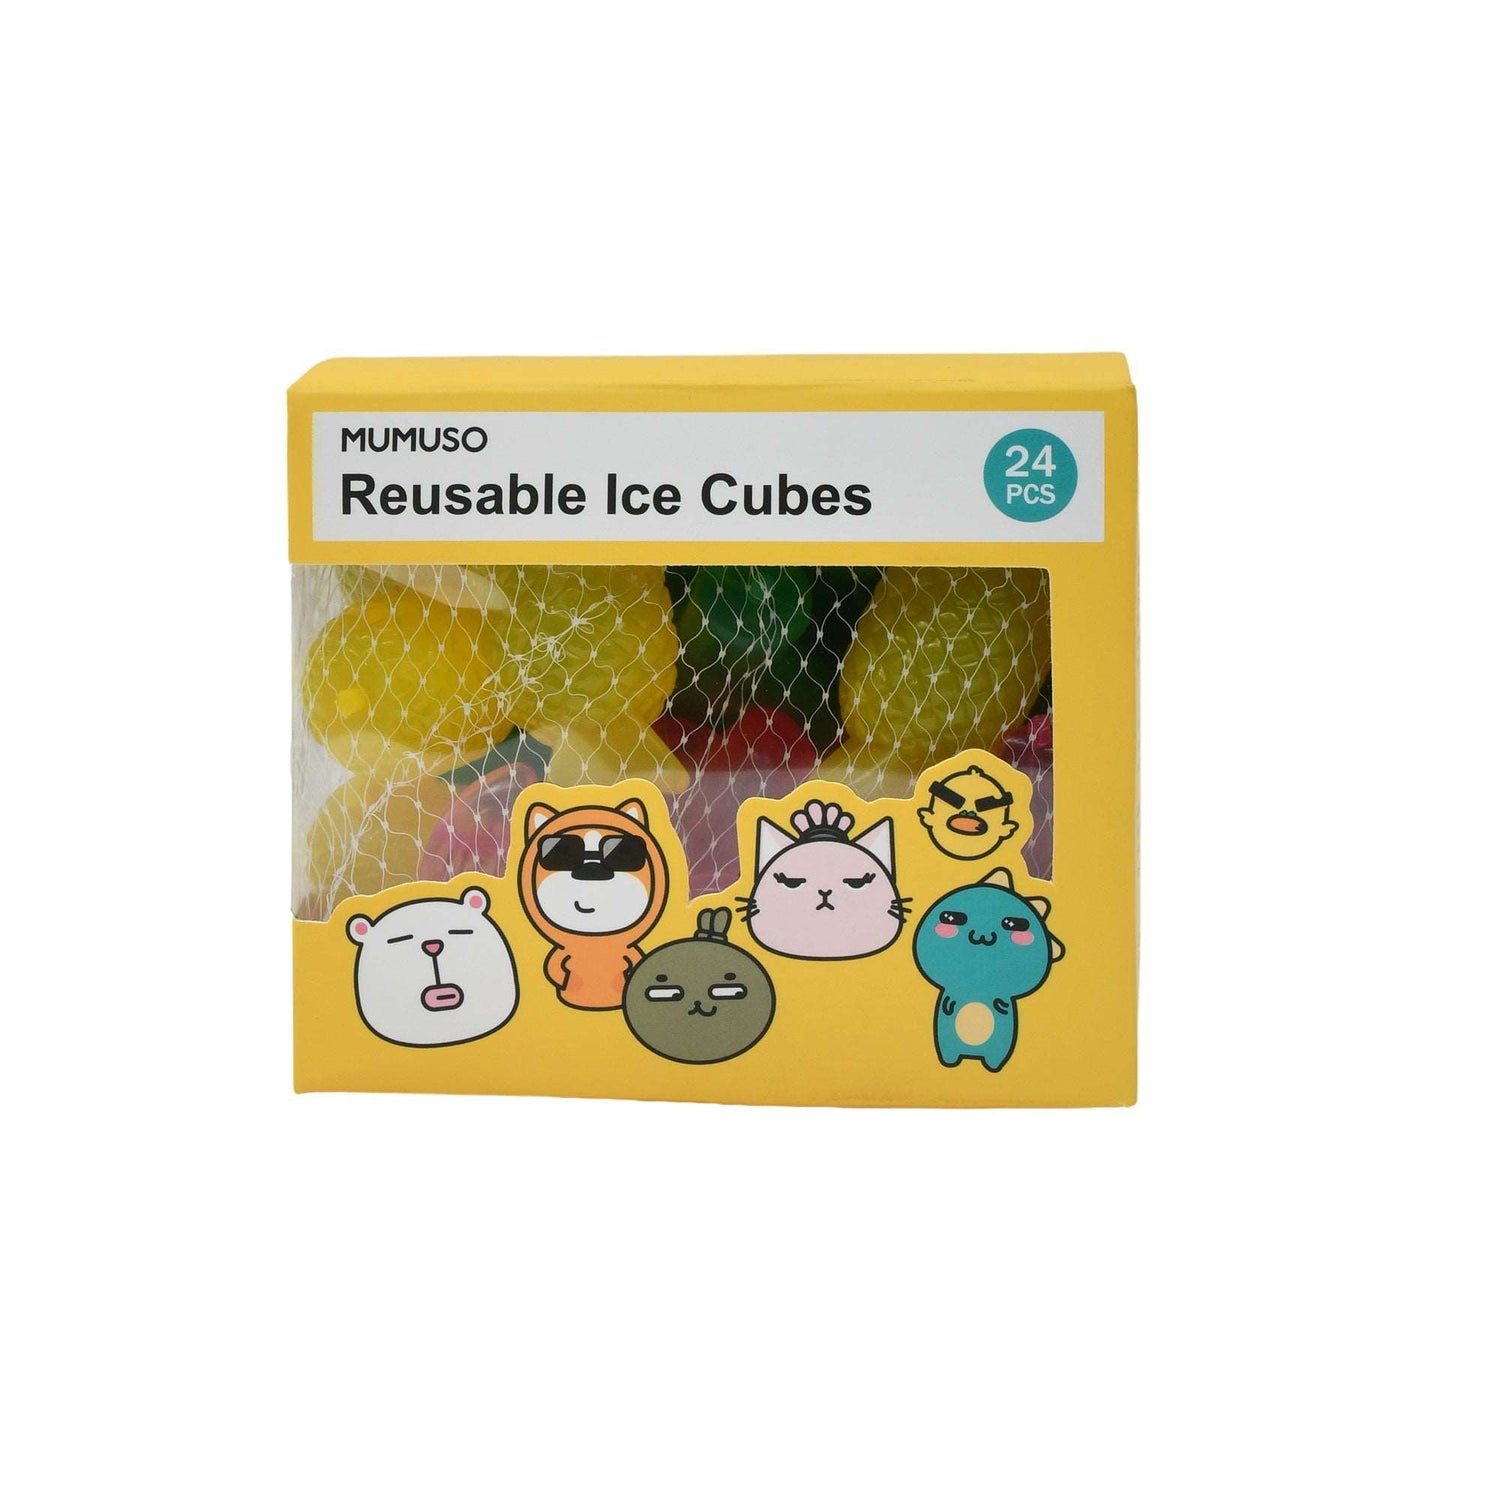 24 Piece of Reusable Ice Cubes Mumuso